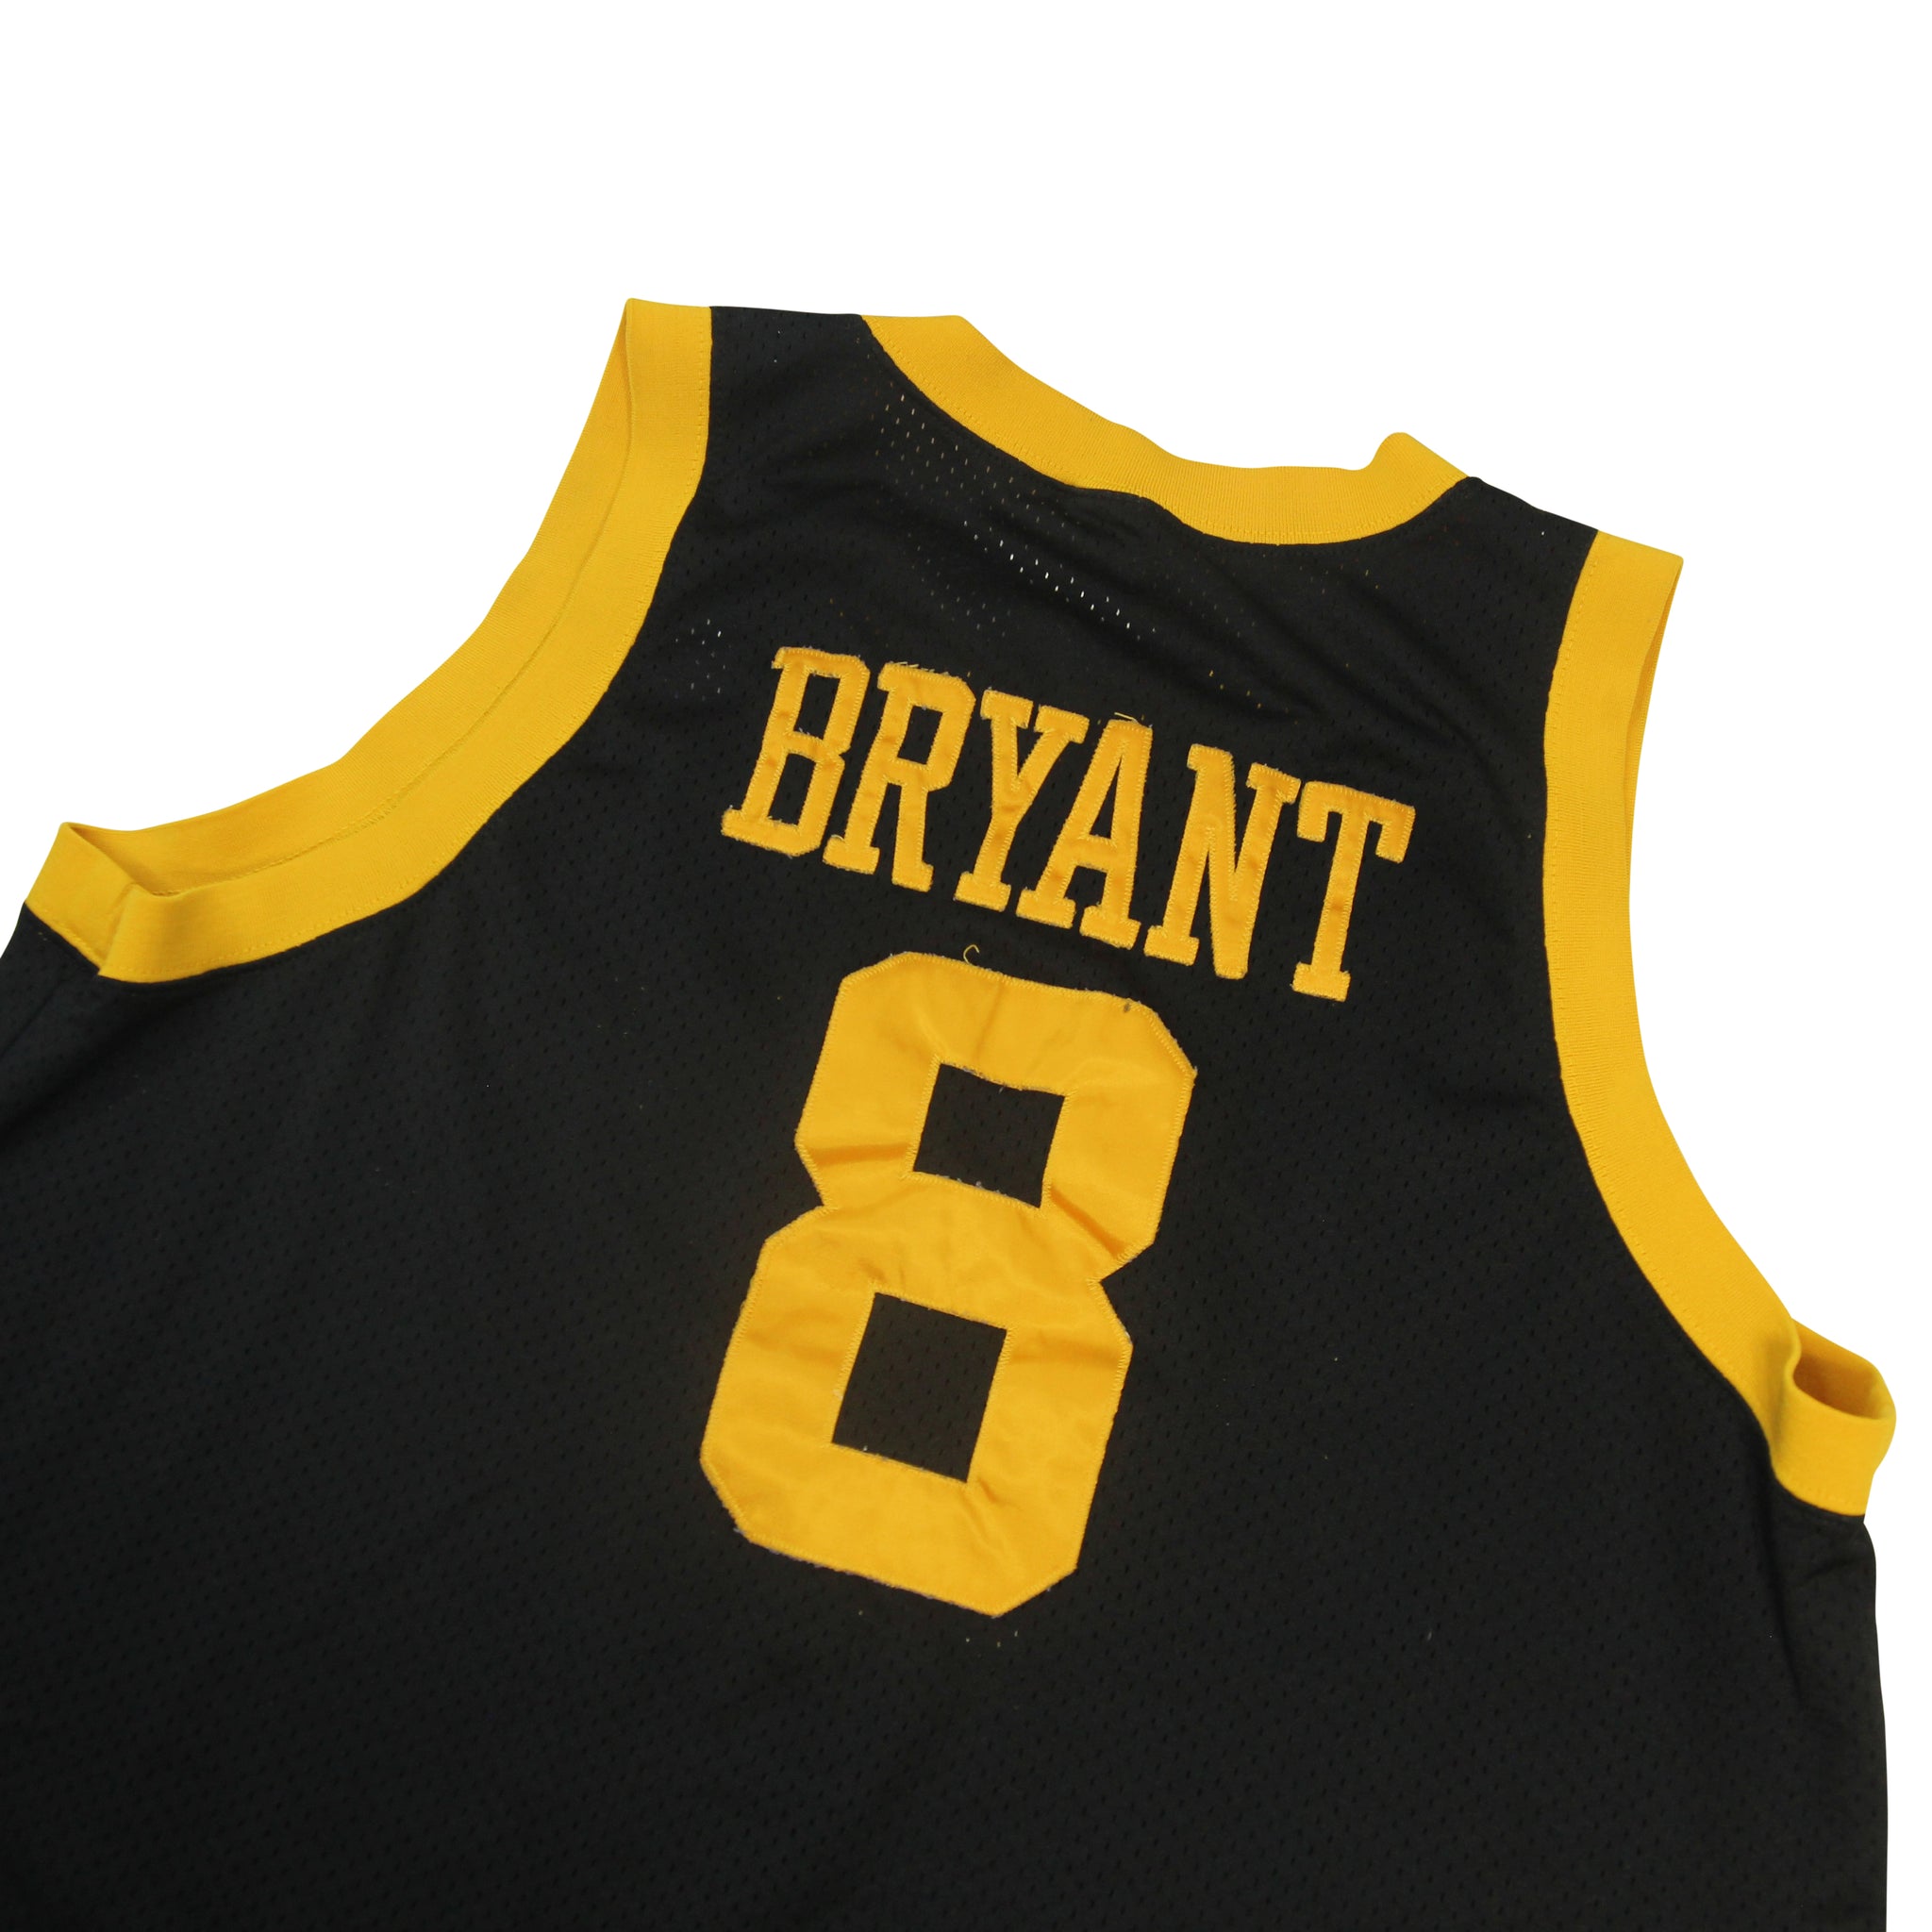 VTG Starter NBA Los Angeles Lakers Kobe Bryant #8 Rookie Year Jersey